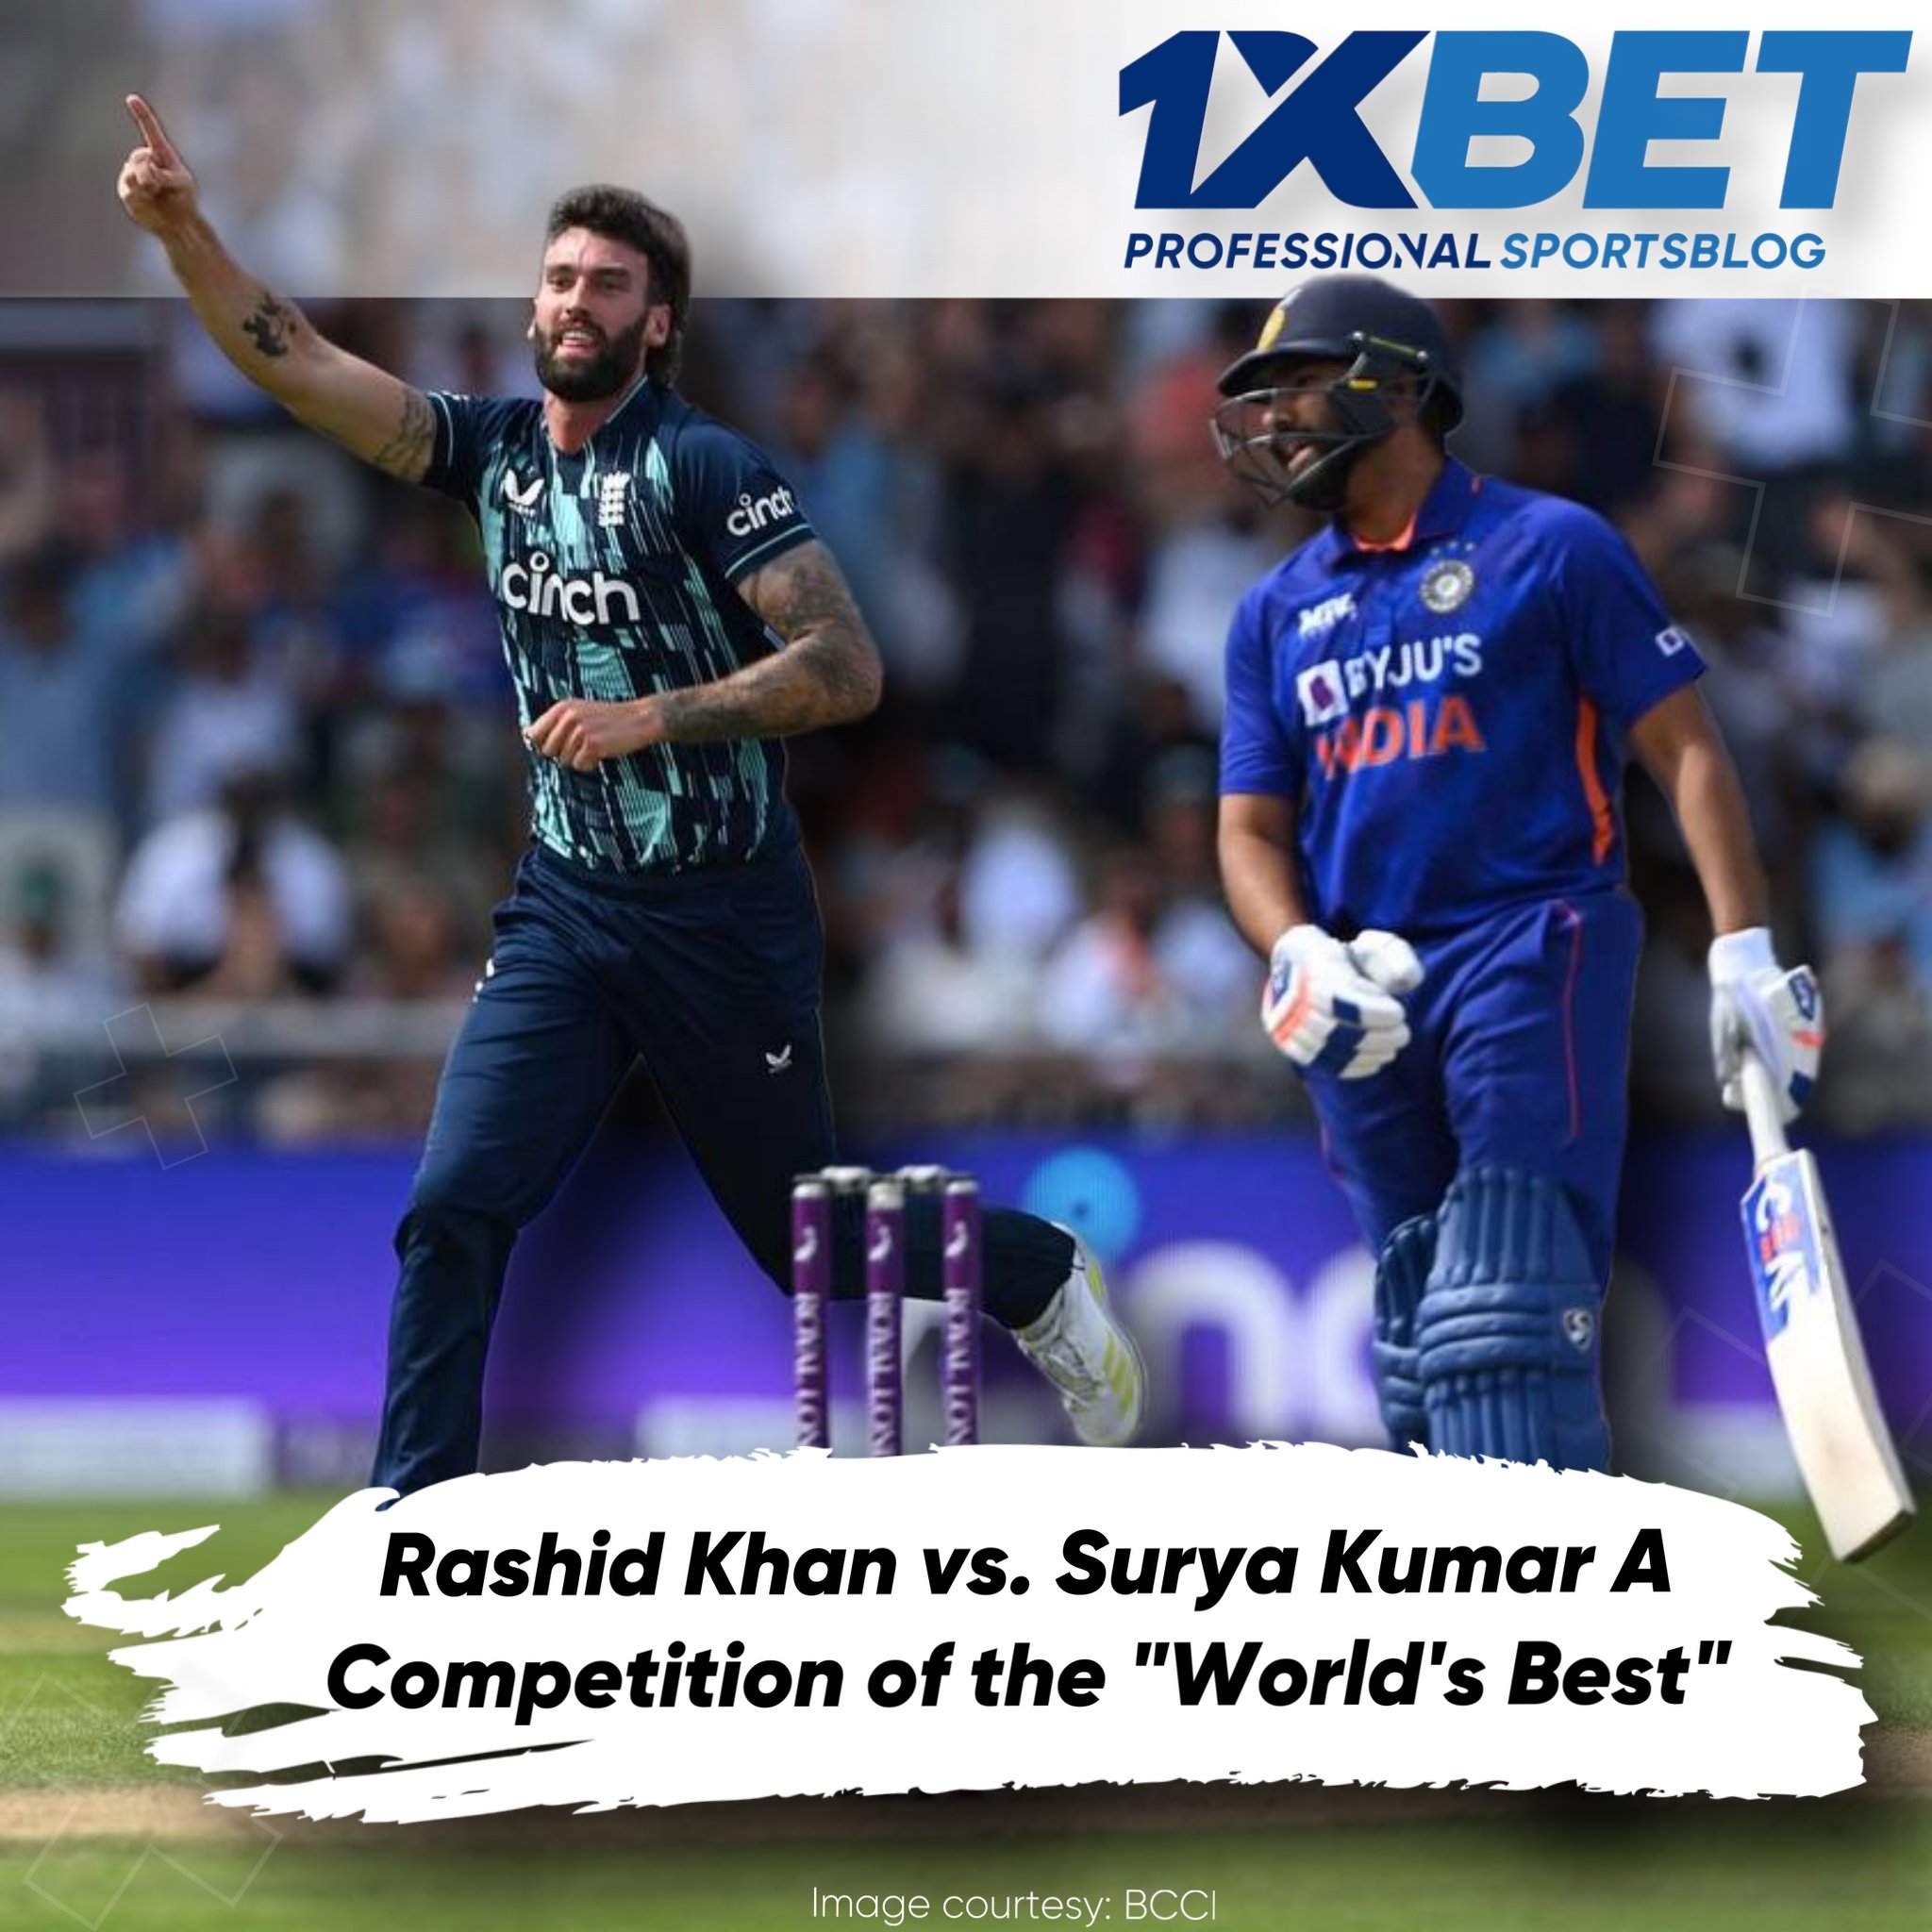 Rashid Khan vs. Surya Kumar A Competition of the "World's Best"